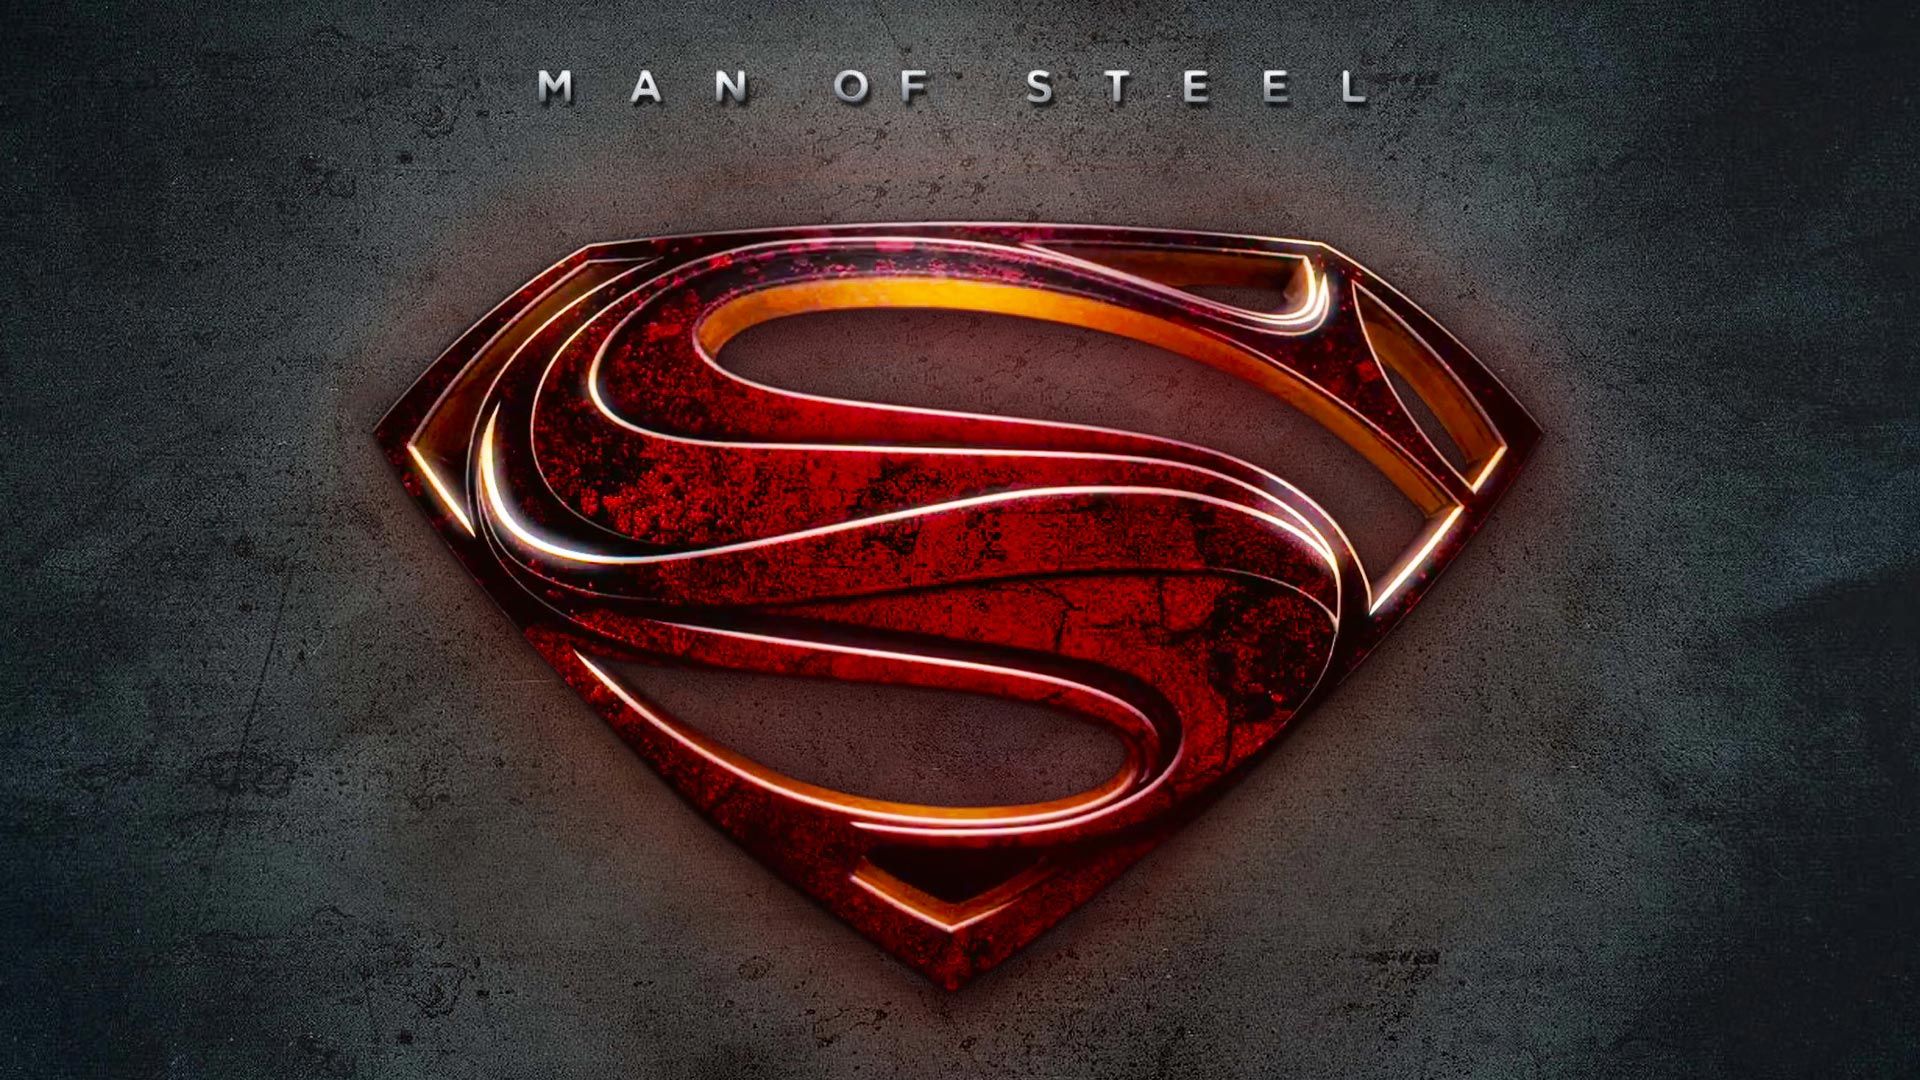 Superman Man of Steel Logo Wallpaper High Resolution 134 - HD ...